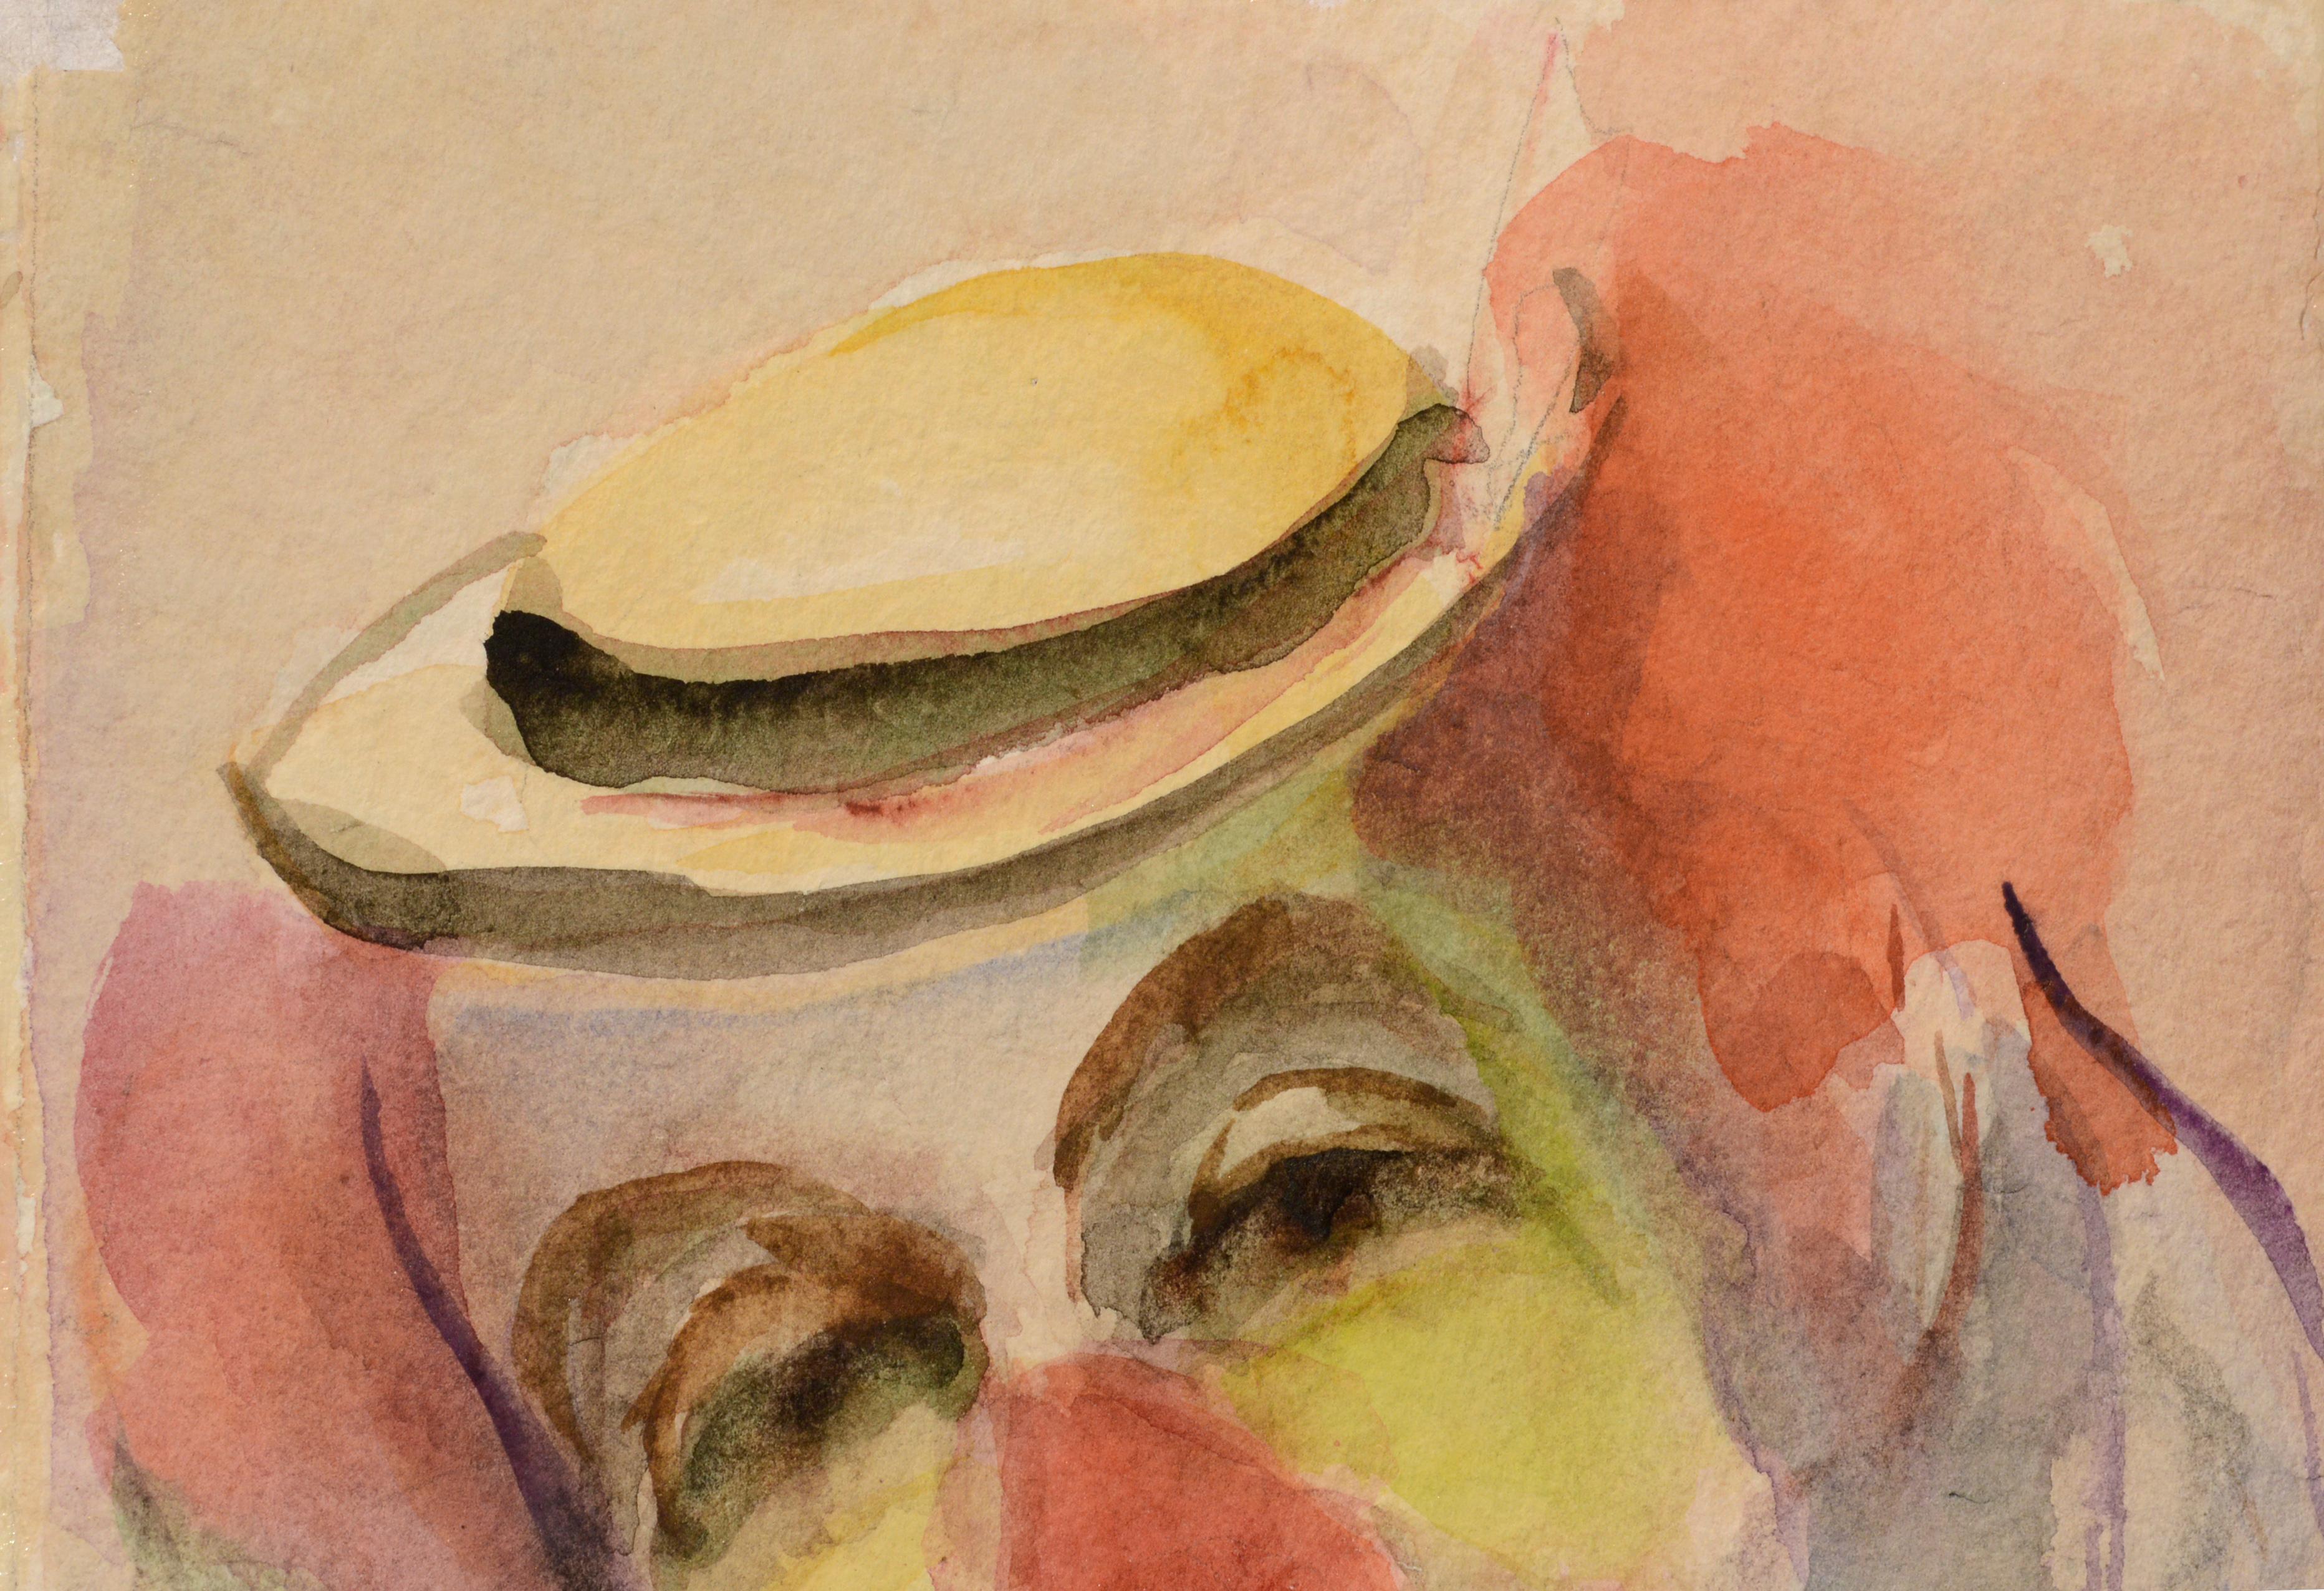 Clown with a Hat (Clown Portrait #9) - Art by Marjorie May Blake